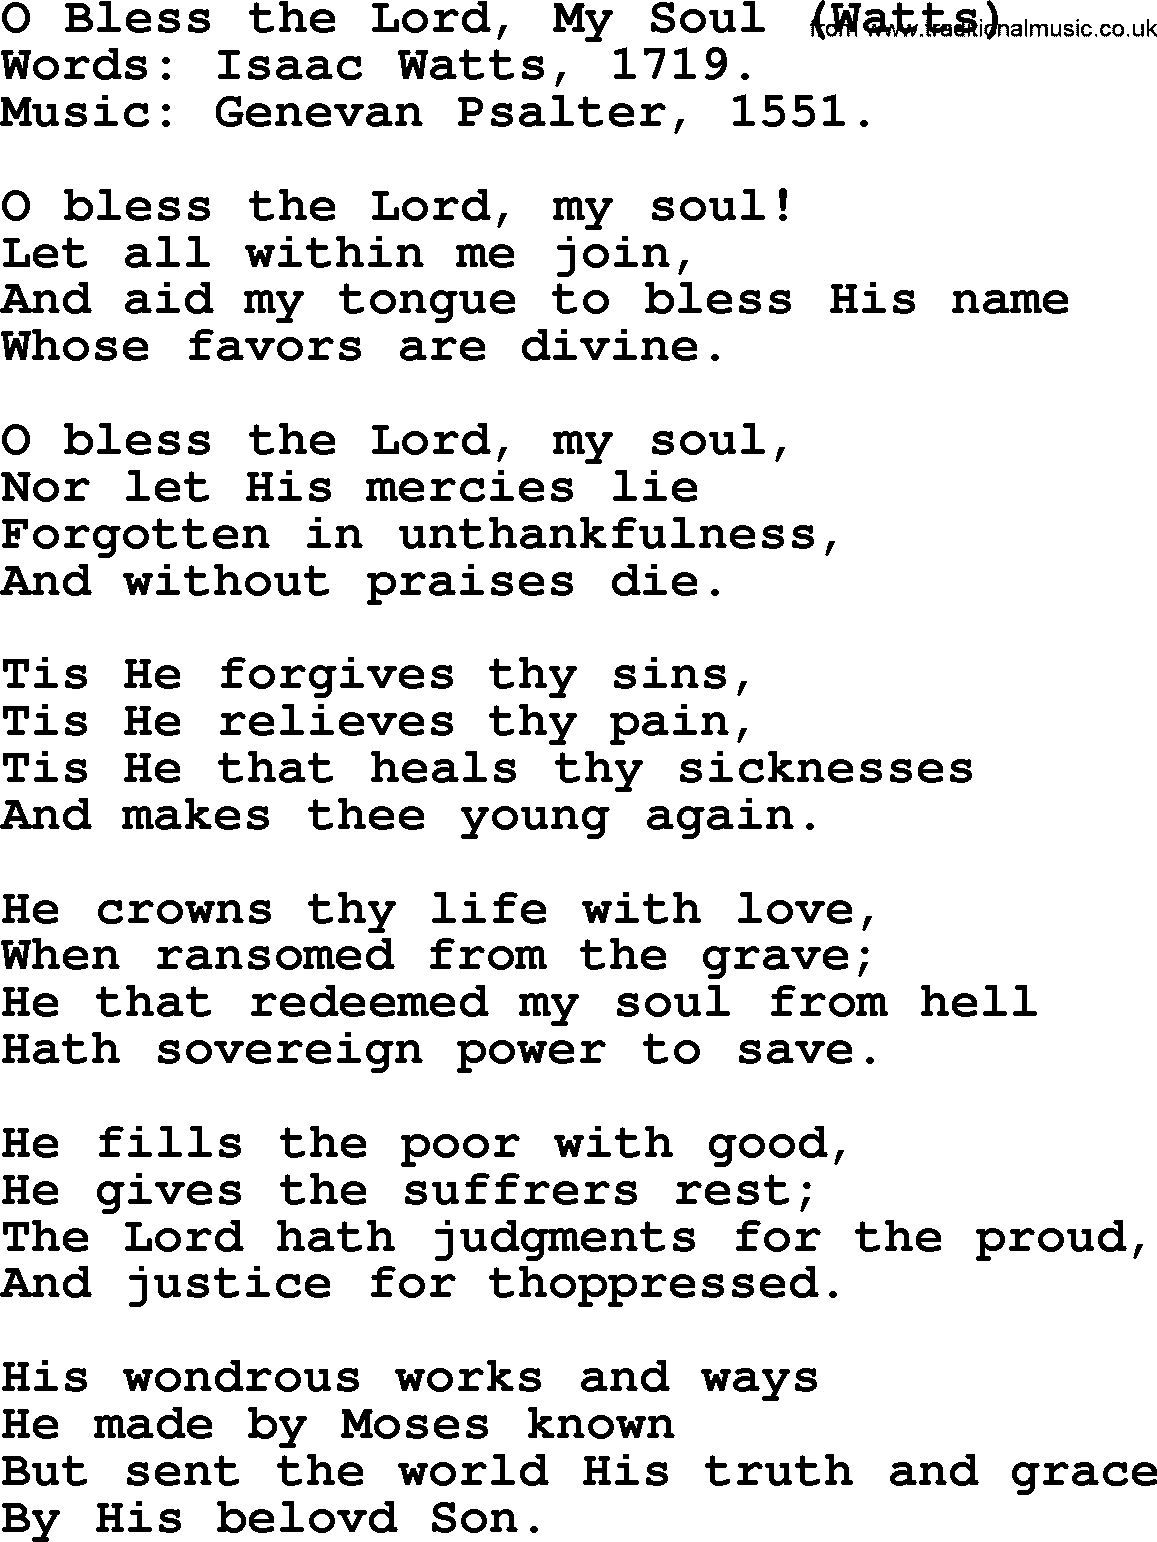 Isaac Watts Christian hymn: O Bless the Lord, My Soul (Watts)- lyricss